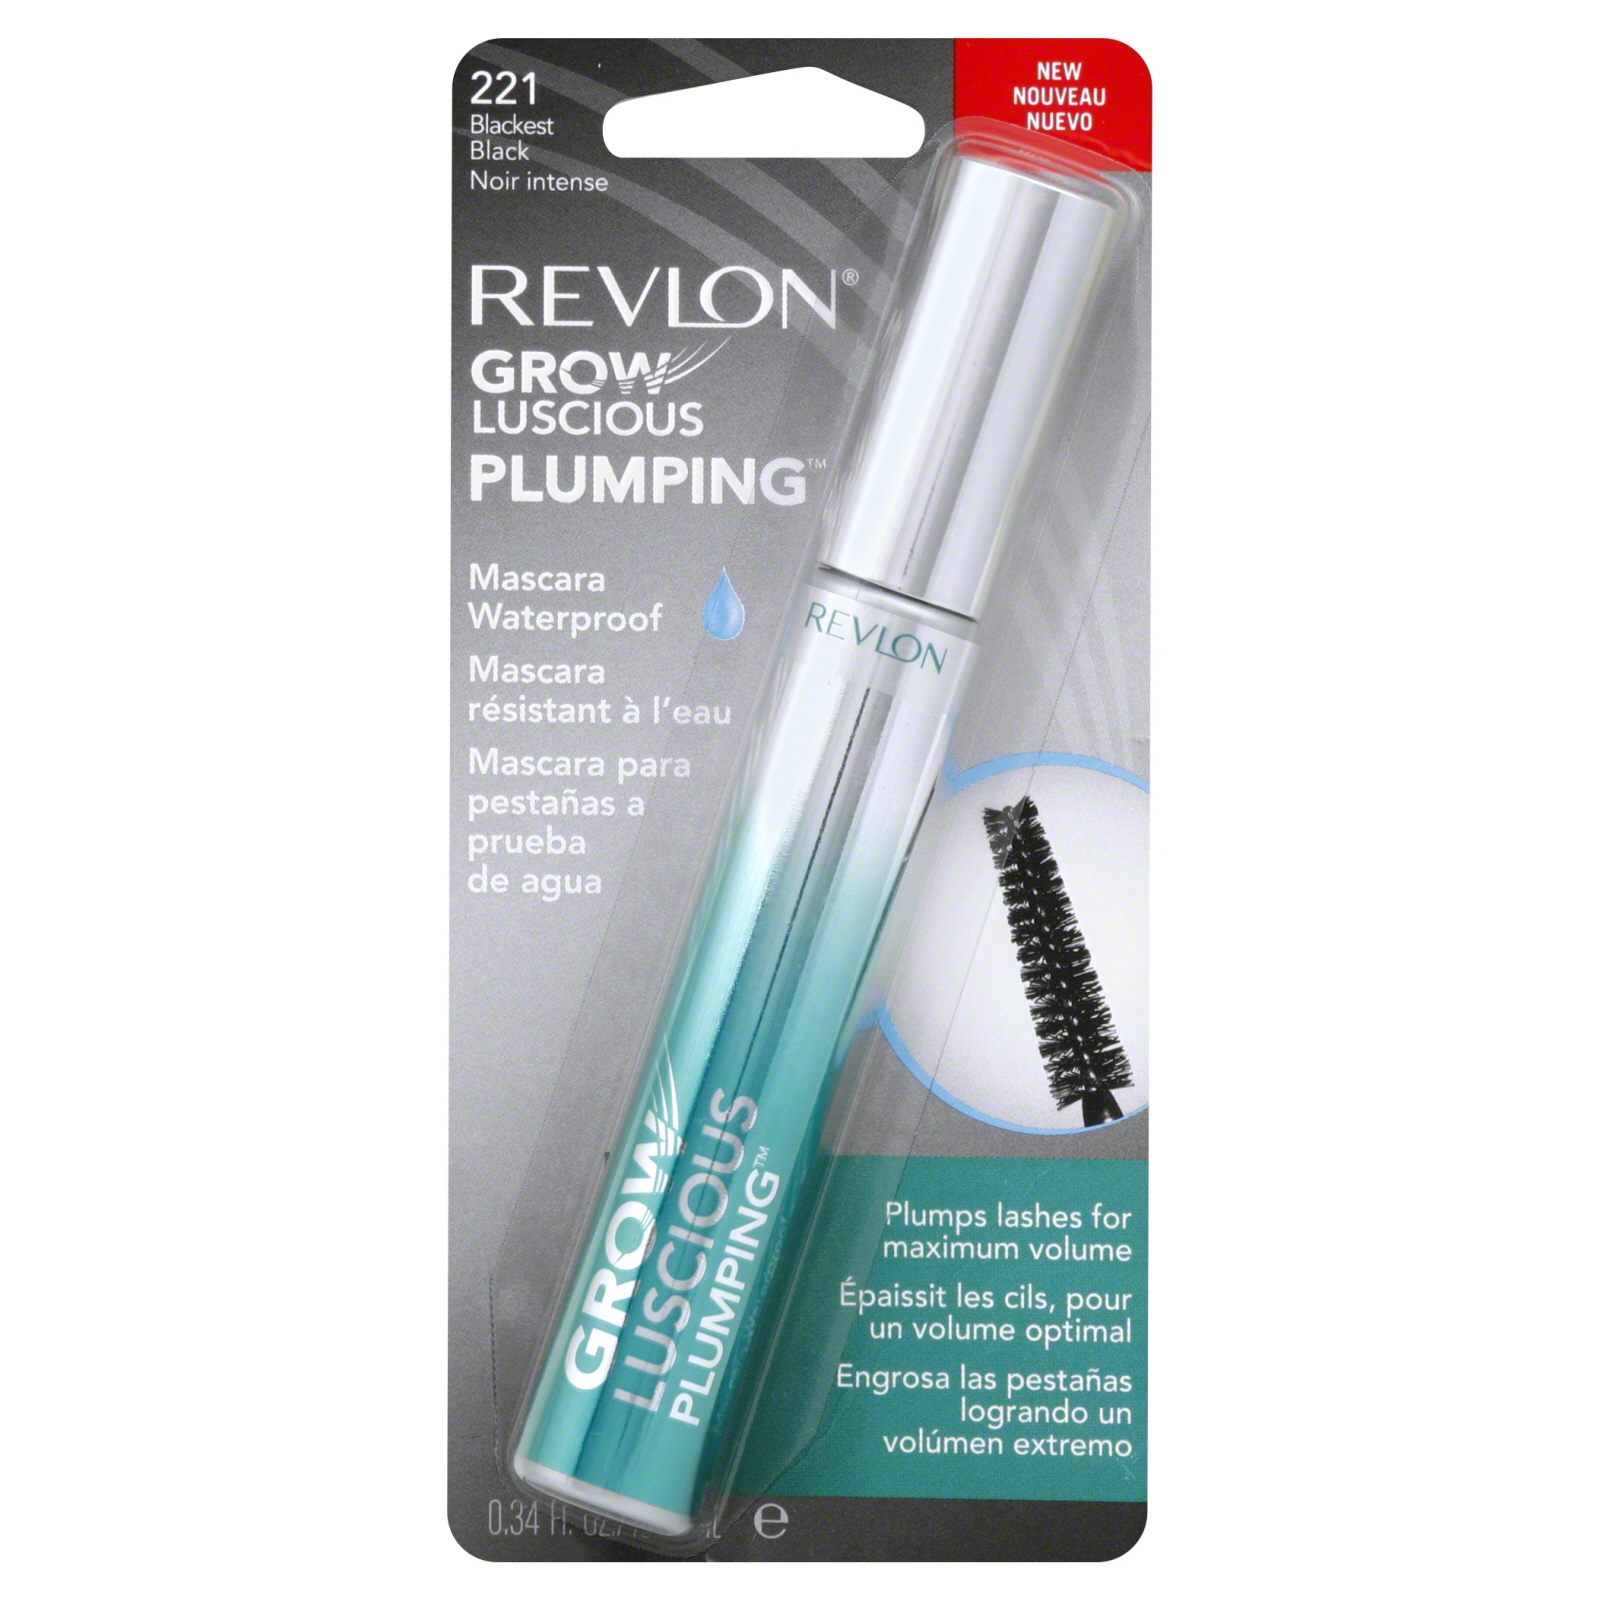 Revlon Grow Luscious Plumping Mascara Waterproof Blackest Black 0.34 fl oz